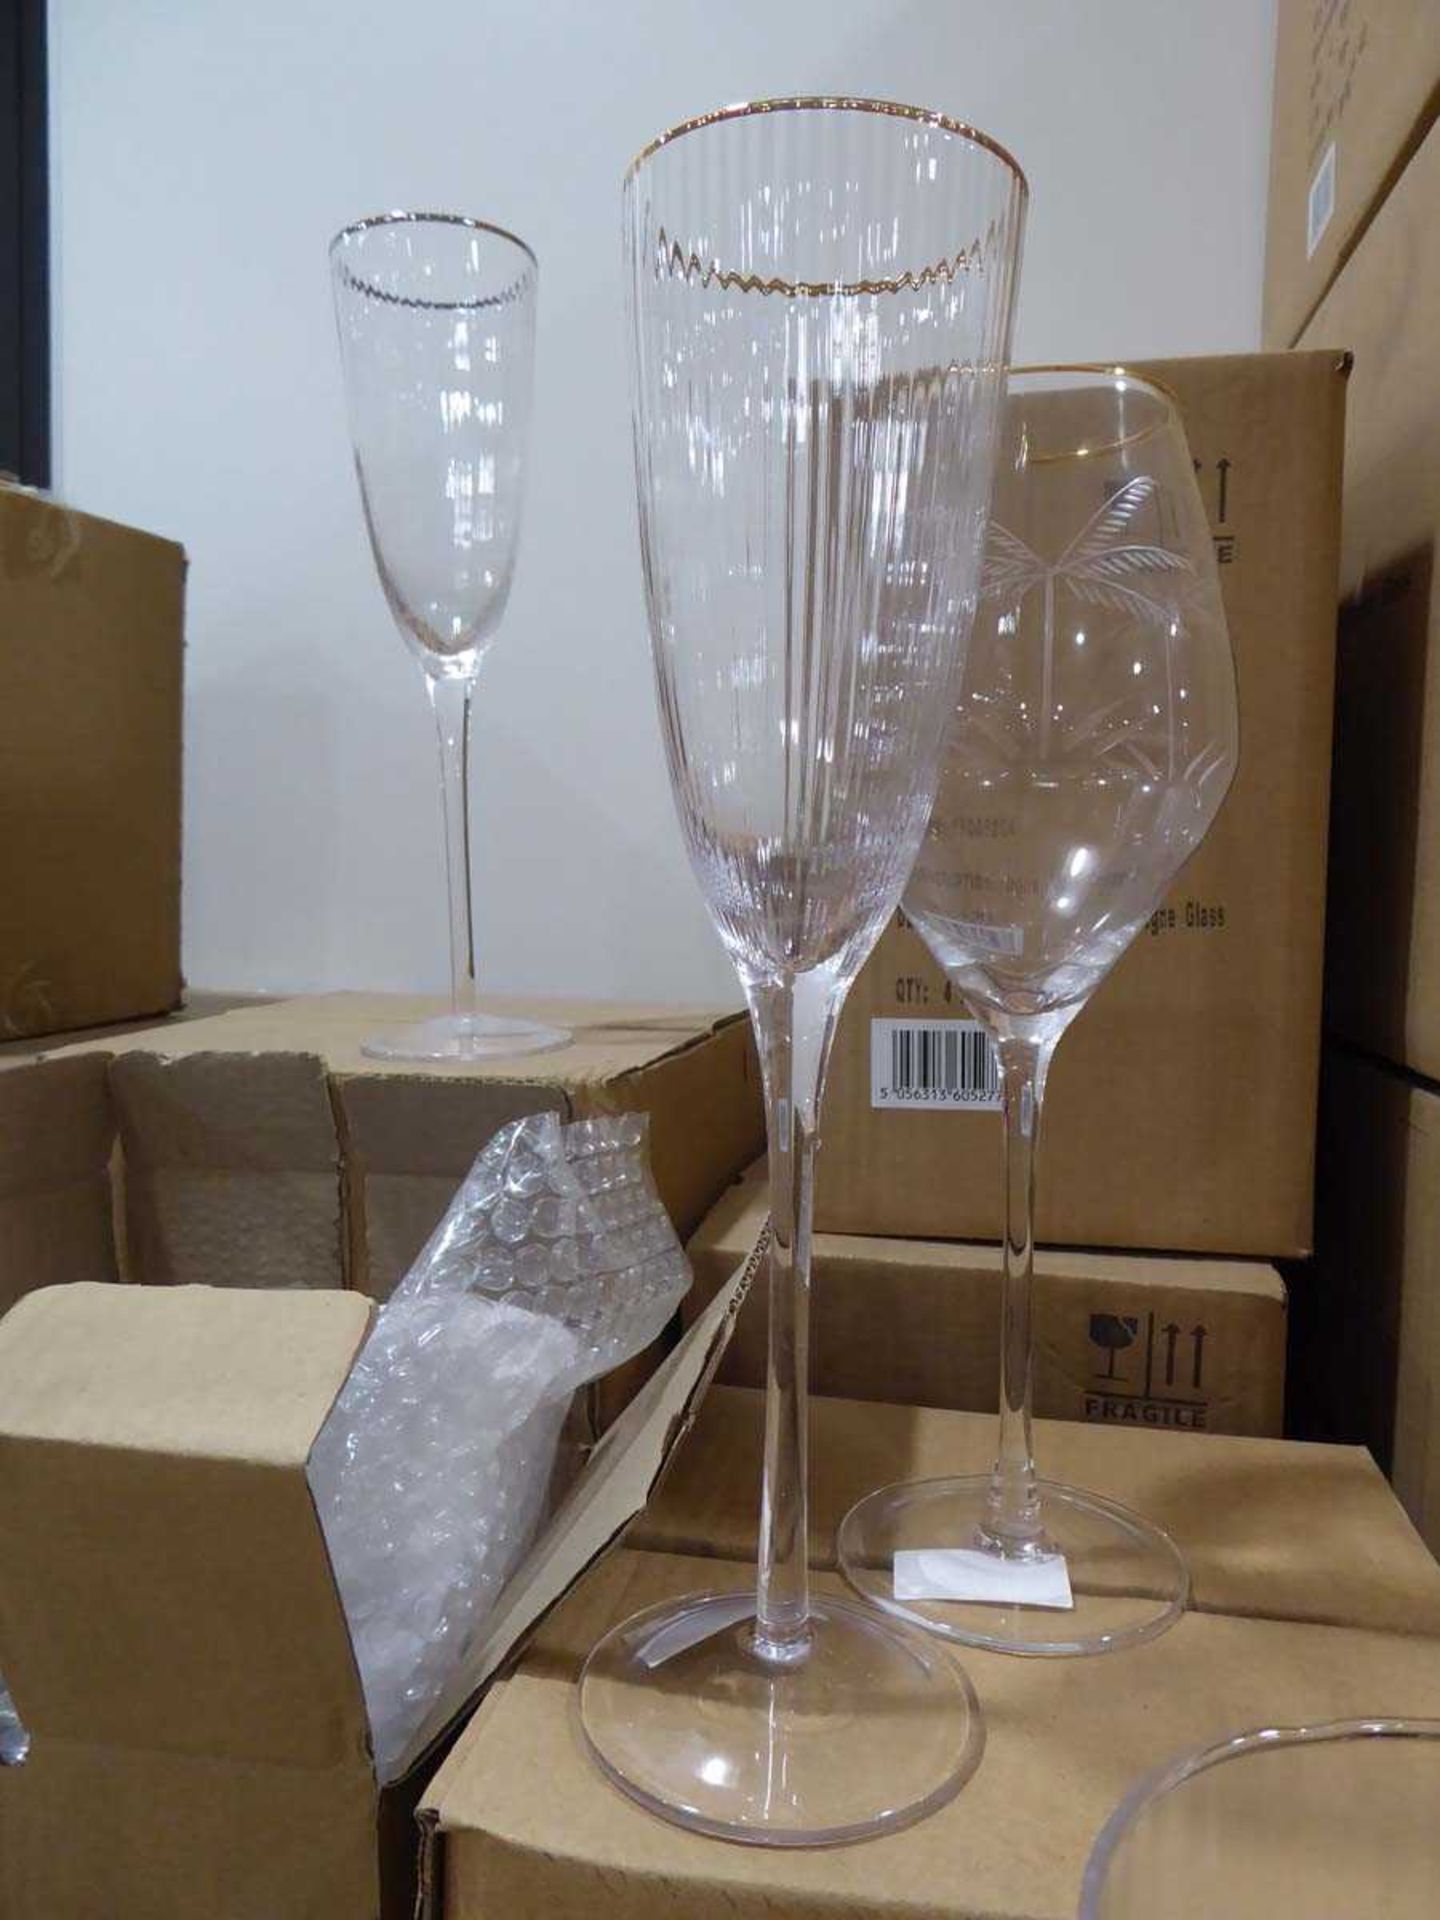 +VAT Large quantity of champagne glasses, flute glasses, wine glasses etc - Image 4 of 4